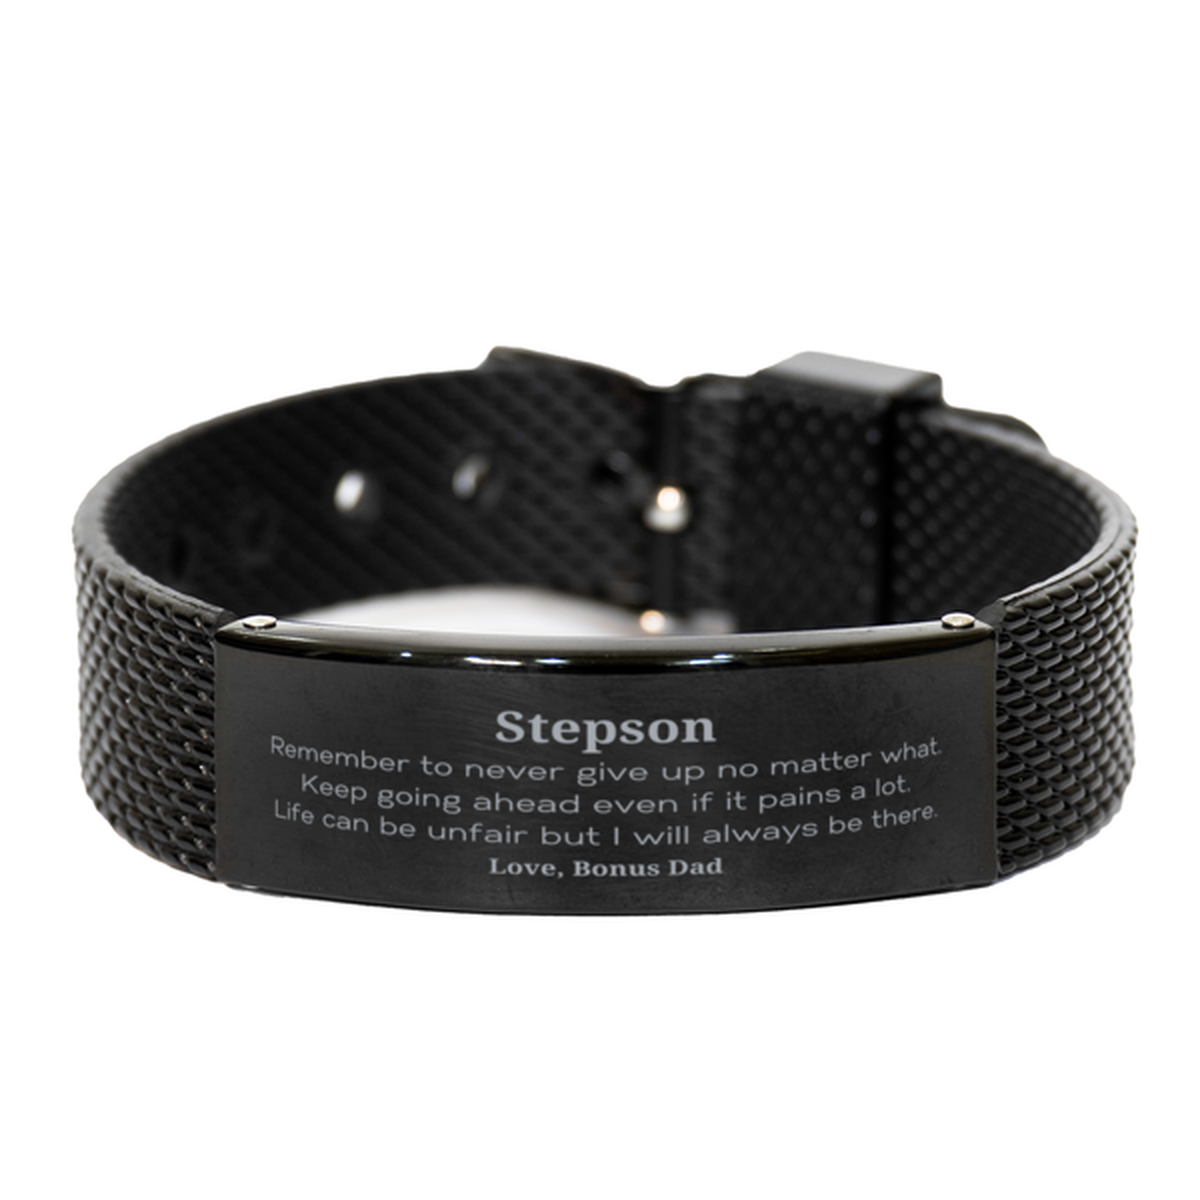 Stepson Motivational Gifts from Bonus Dad, Remember to never give up no matter what, Inspirational Birthday Black Shark Mesh Bracelet for Stepson